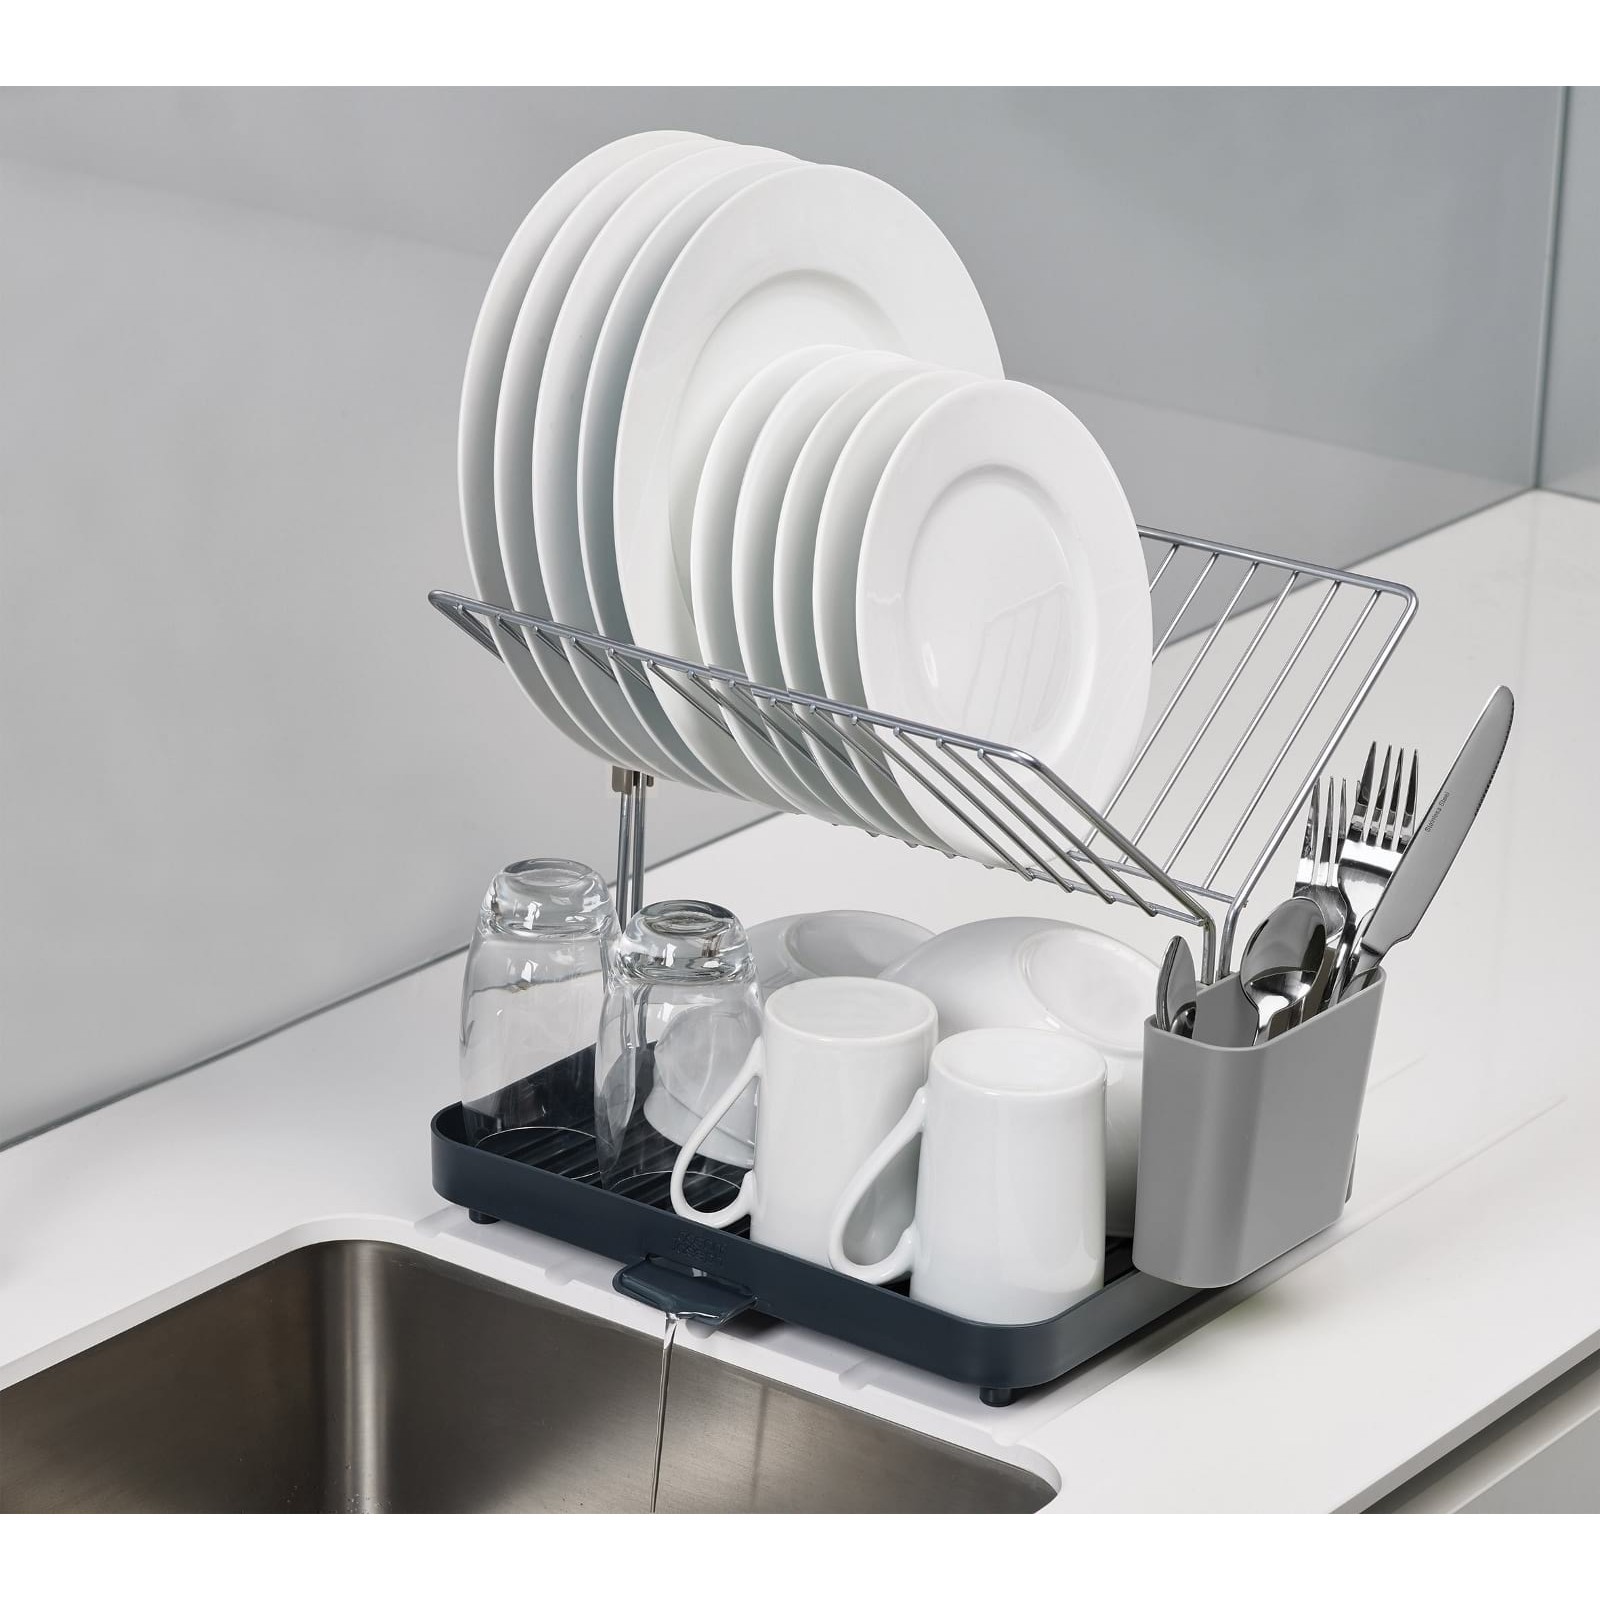 2 Tier Multi-Functional Dish Drainer Grey